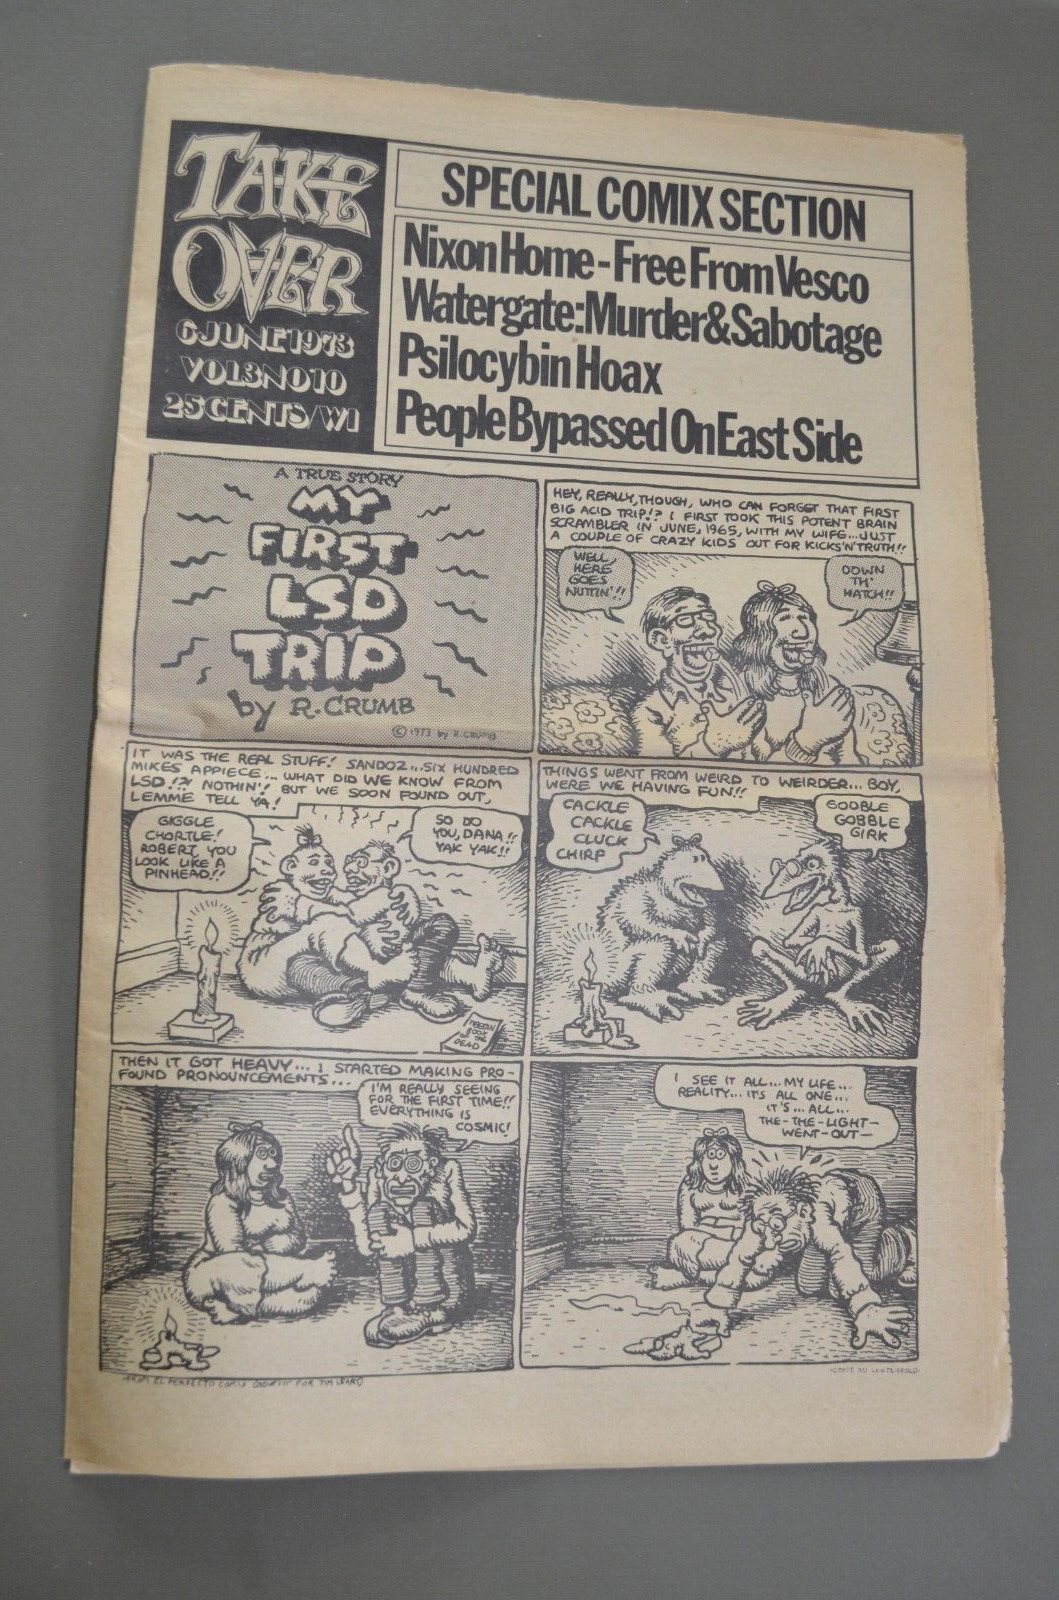 Takeover--1972 Radical Underground Newspaper, Madison WI